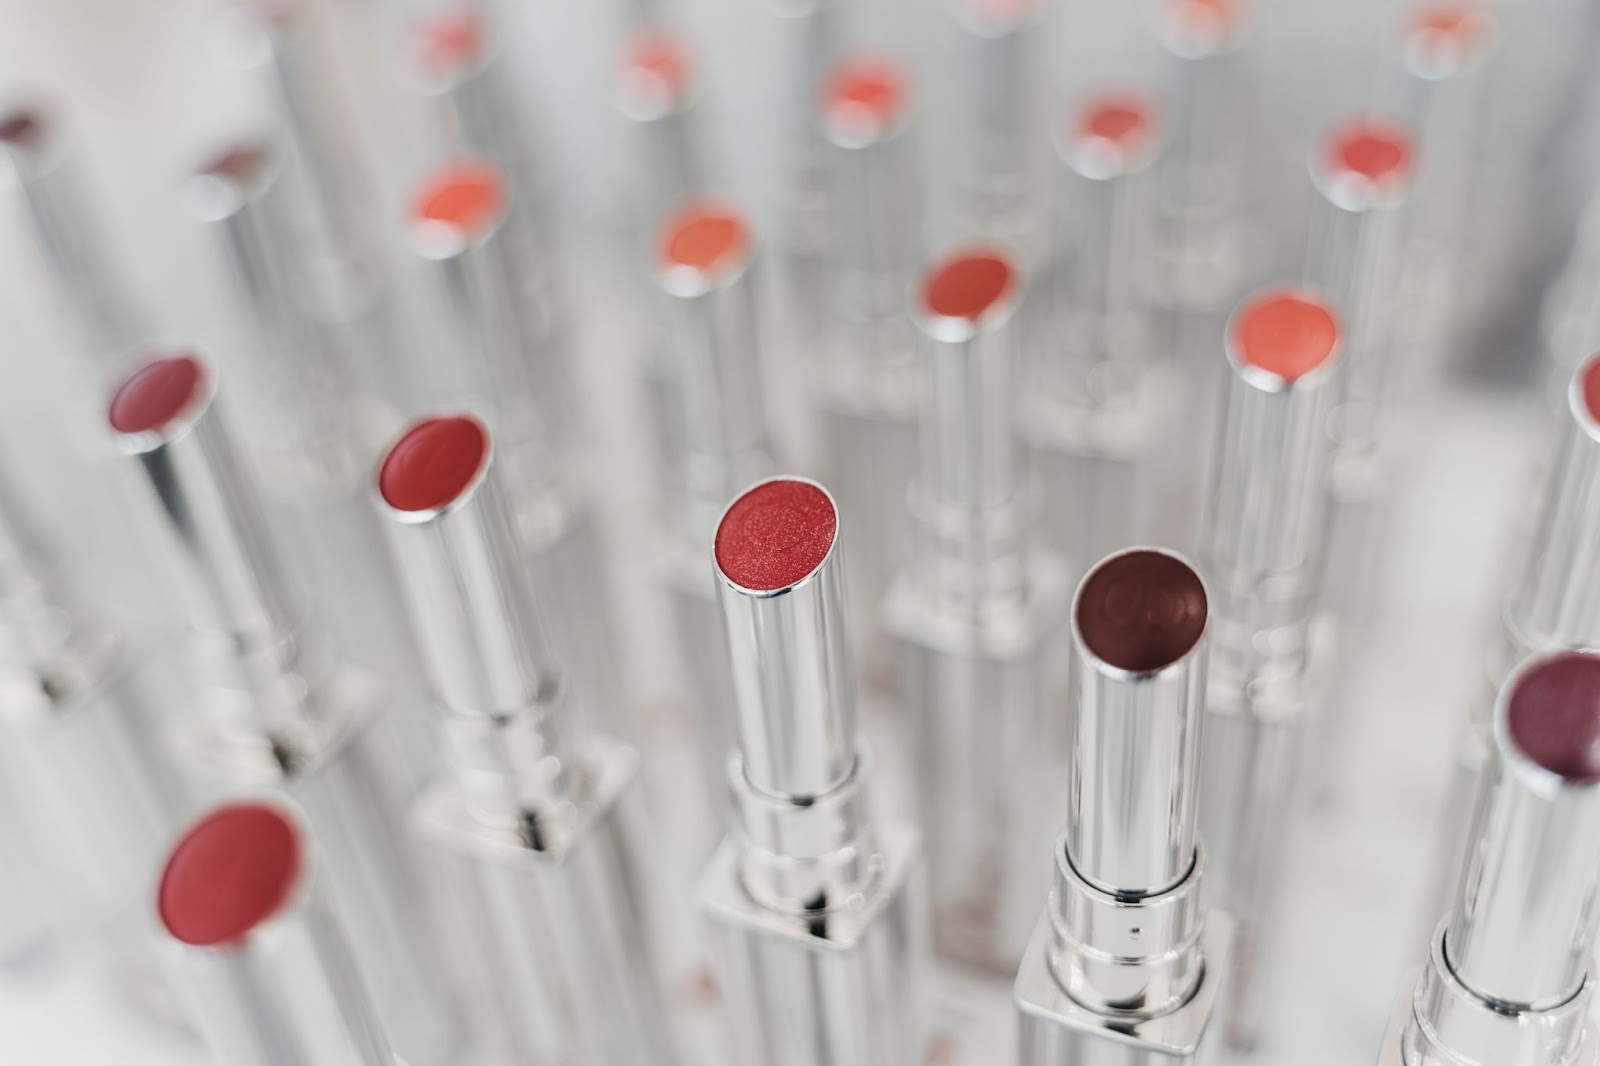 lipsticks on display